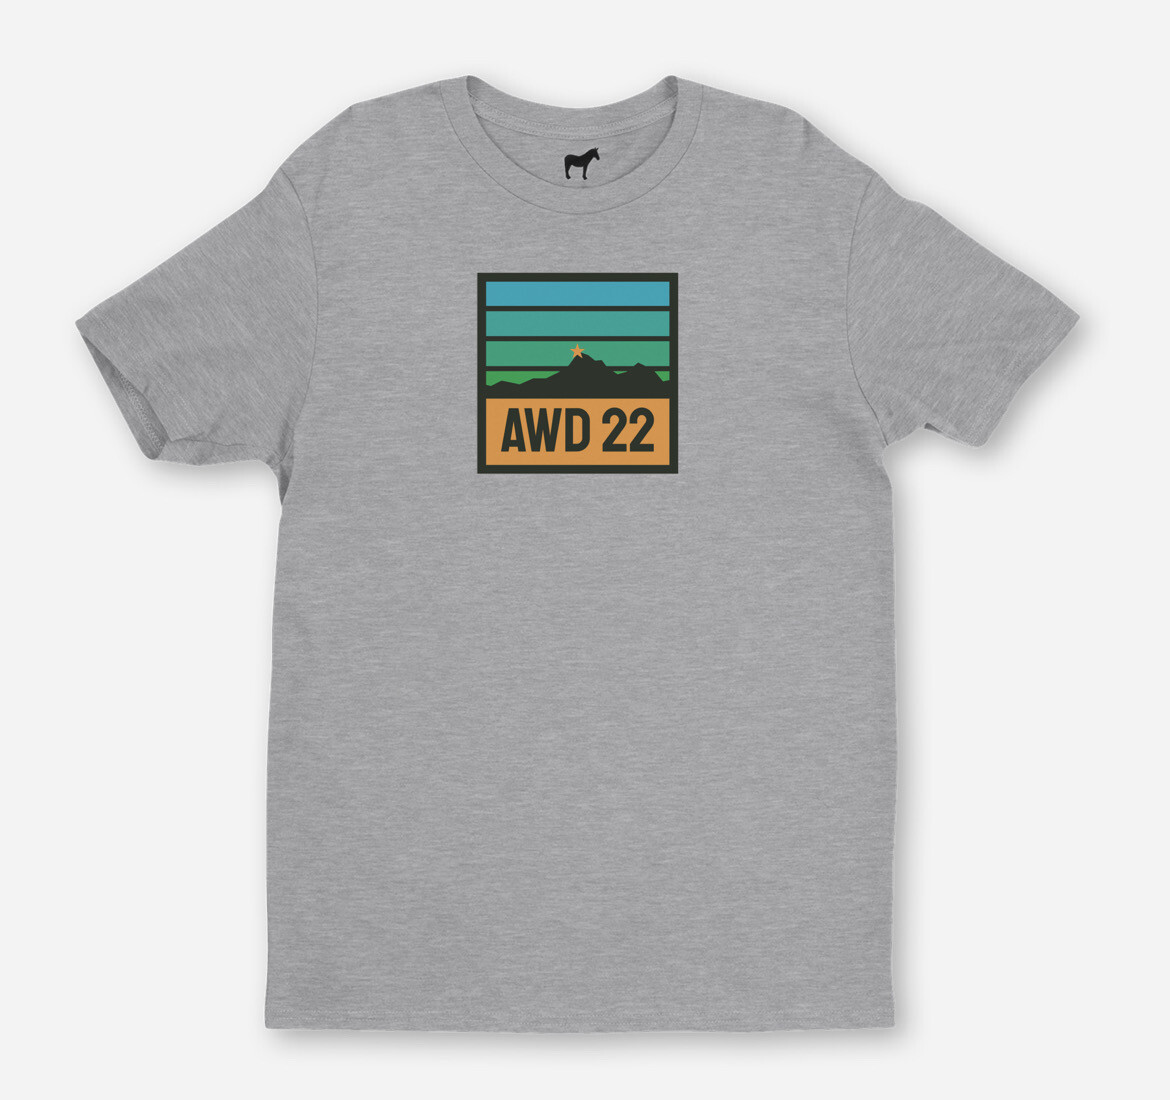 AWD FEST 22 Soft-Touch Men’s T-shirt